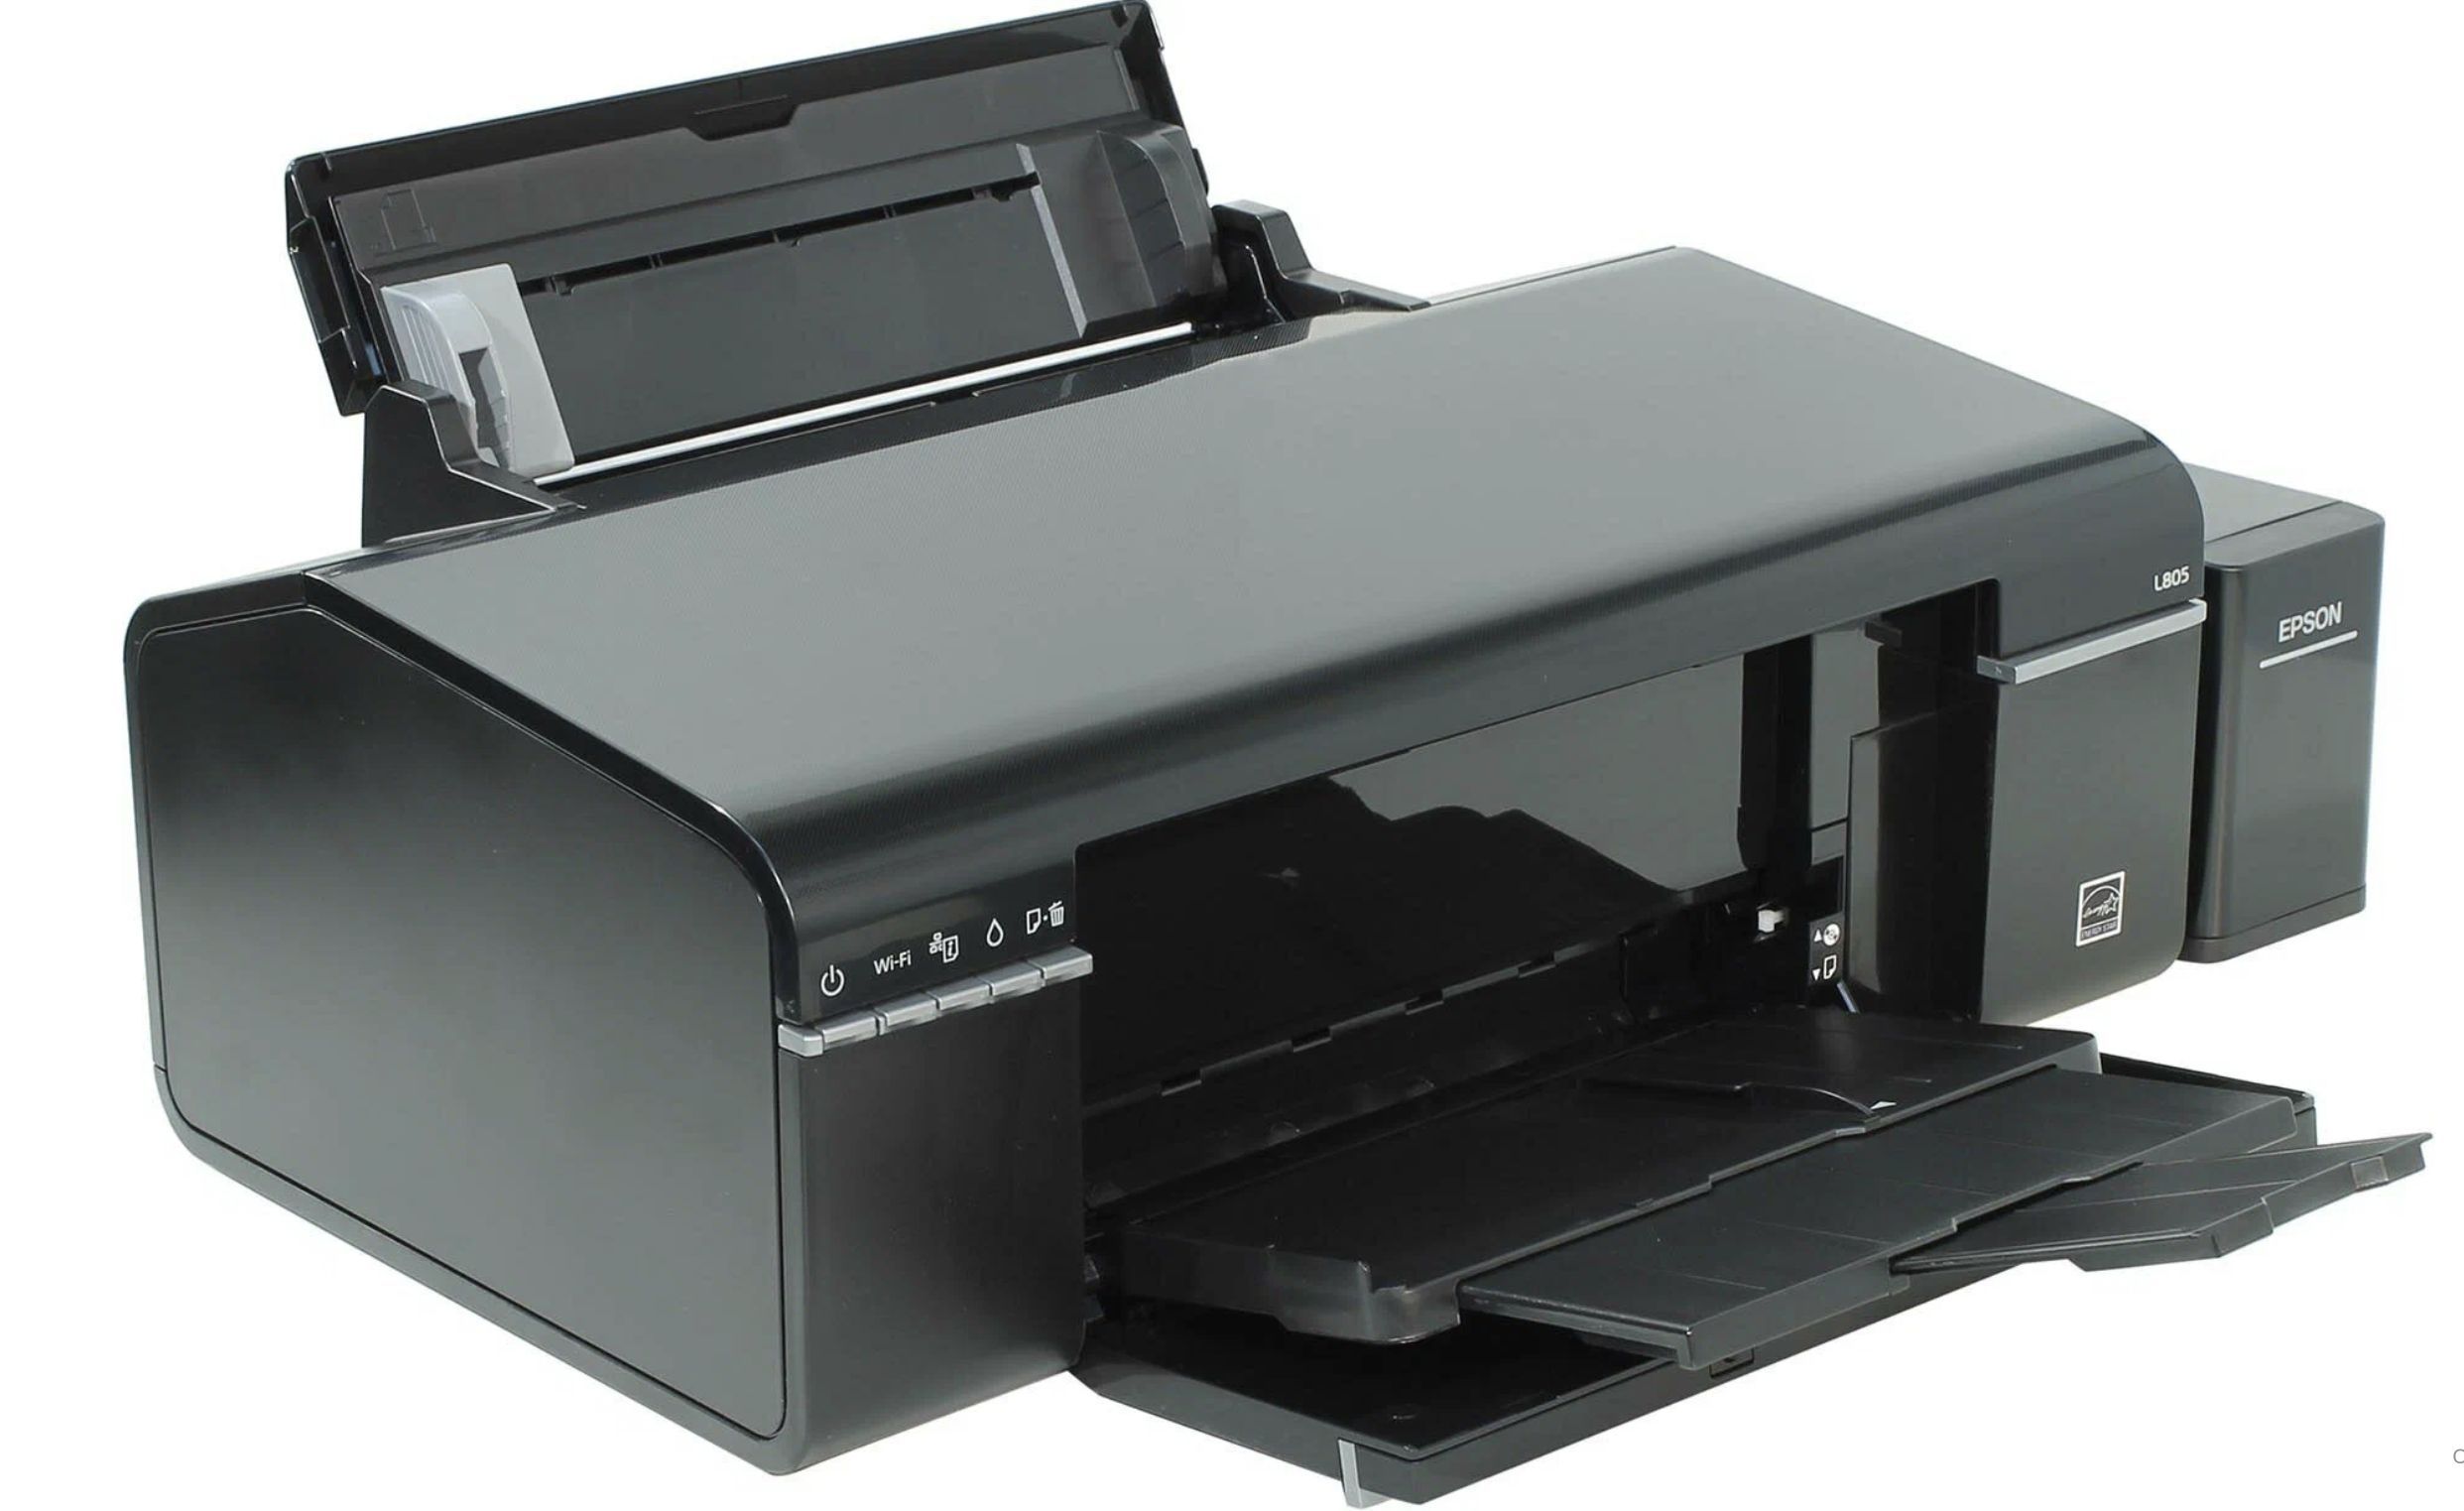 Epson print l805. Принтер Epson l805. Принтер Epson l805 Black. Принтер струйный Epson l805 цветной. Принтер струйный Epson l805, черный.